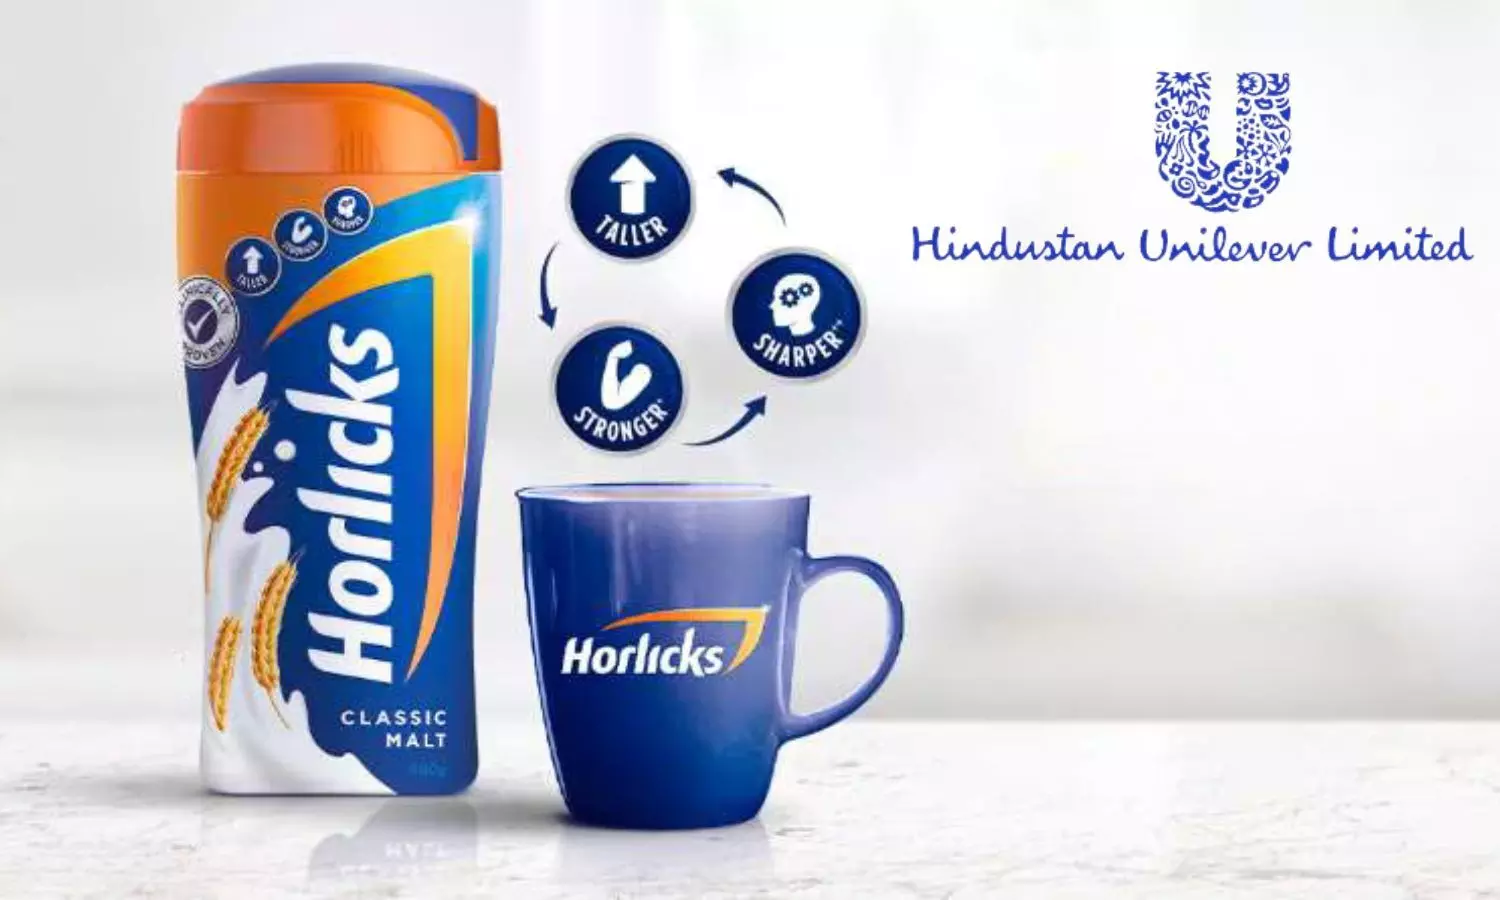 horlicks, bournvita, fssai, Hindustan Unilever Limited